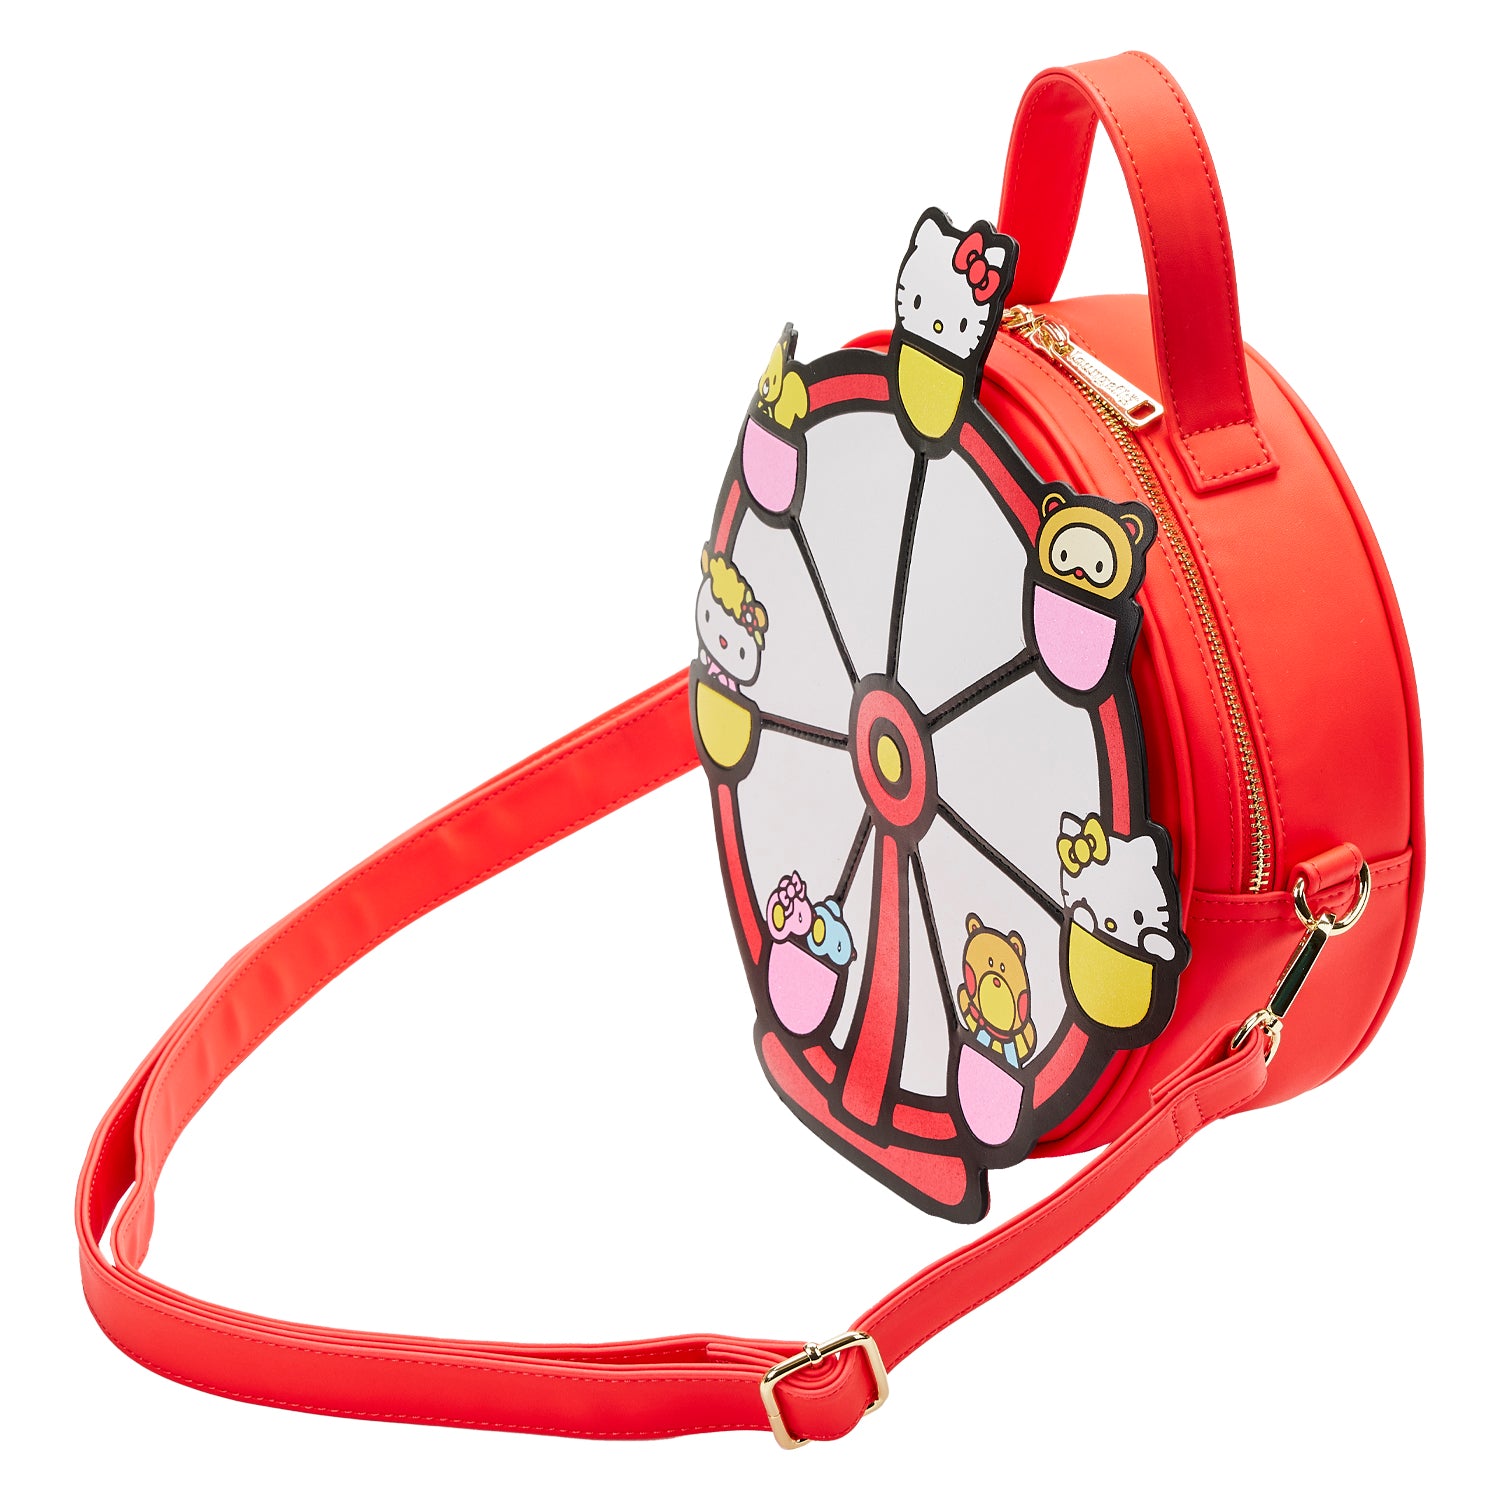 LoungeFly Sanrio Hello Kitty Patent Large Satchel Purse - Women's handbags